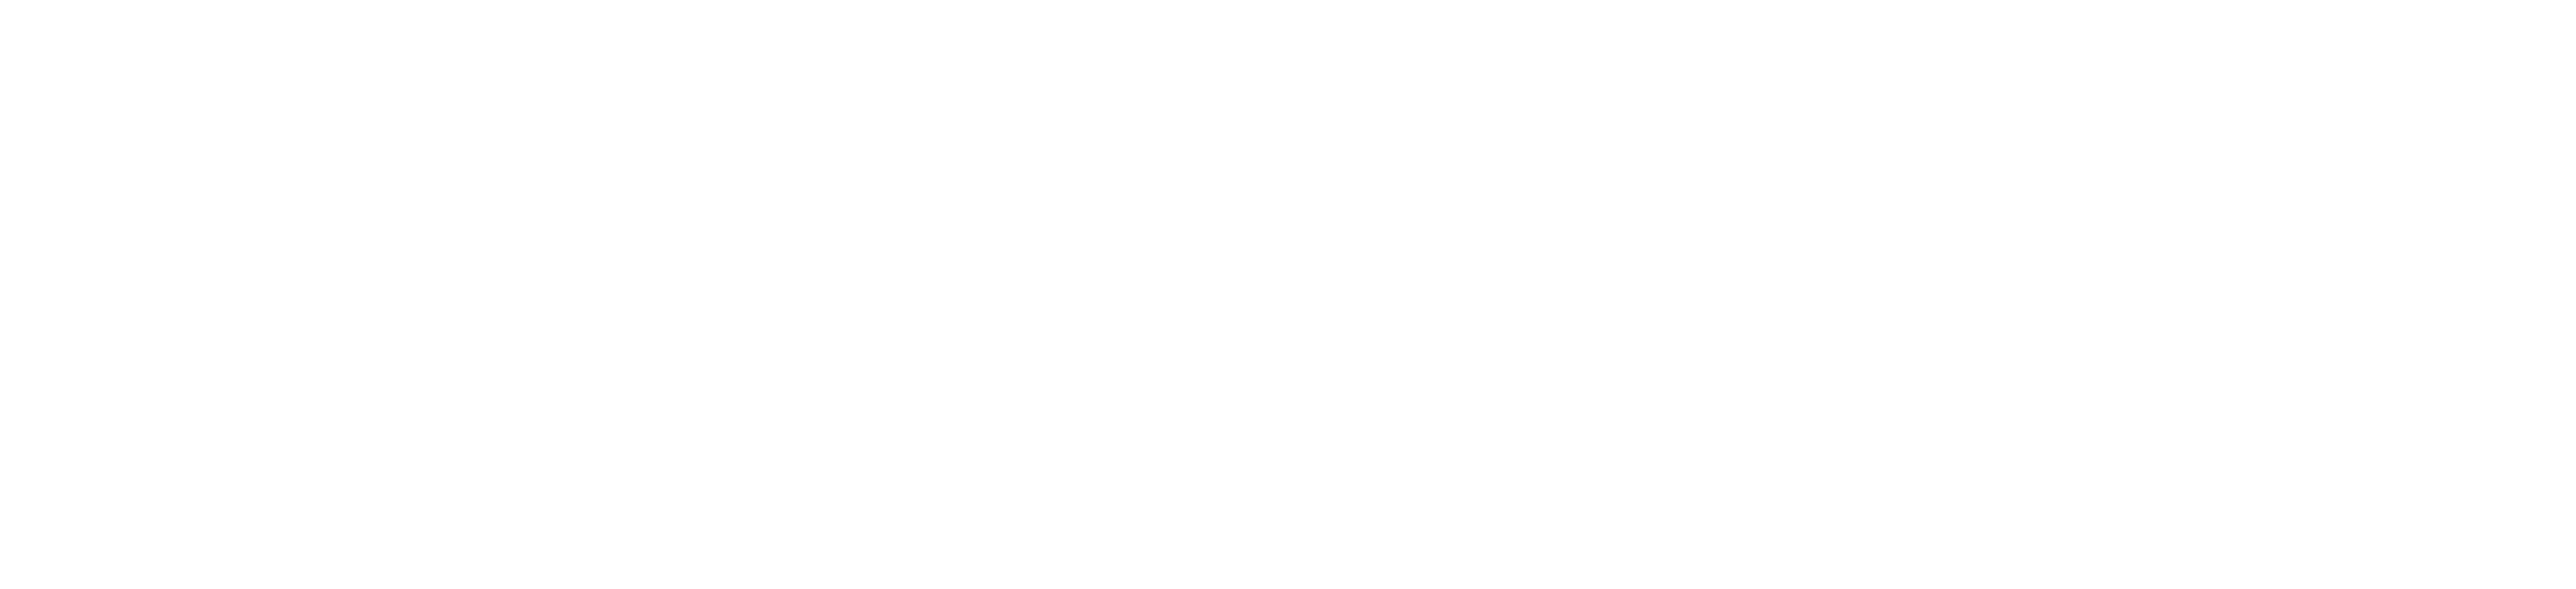 Patrick Marketing Inc.